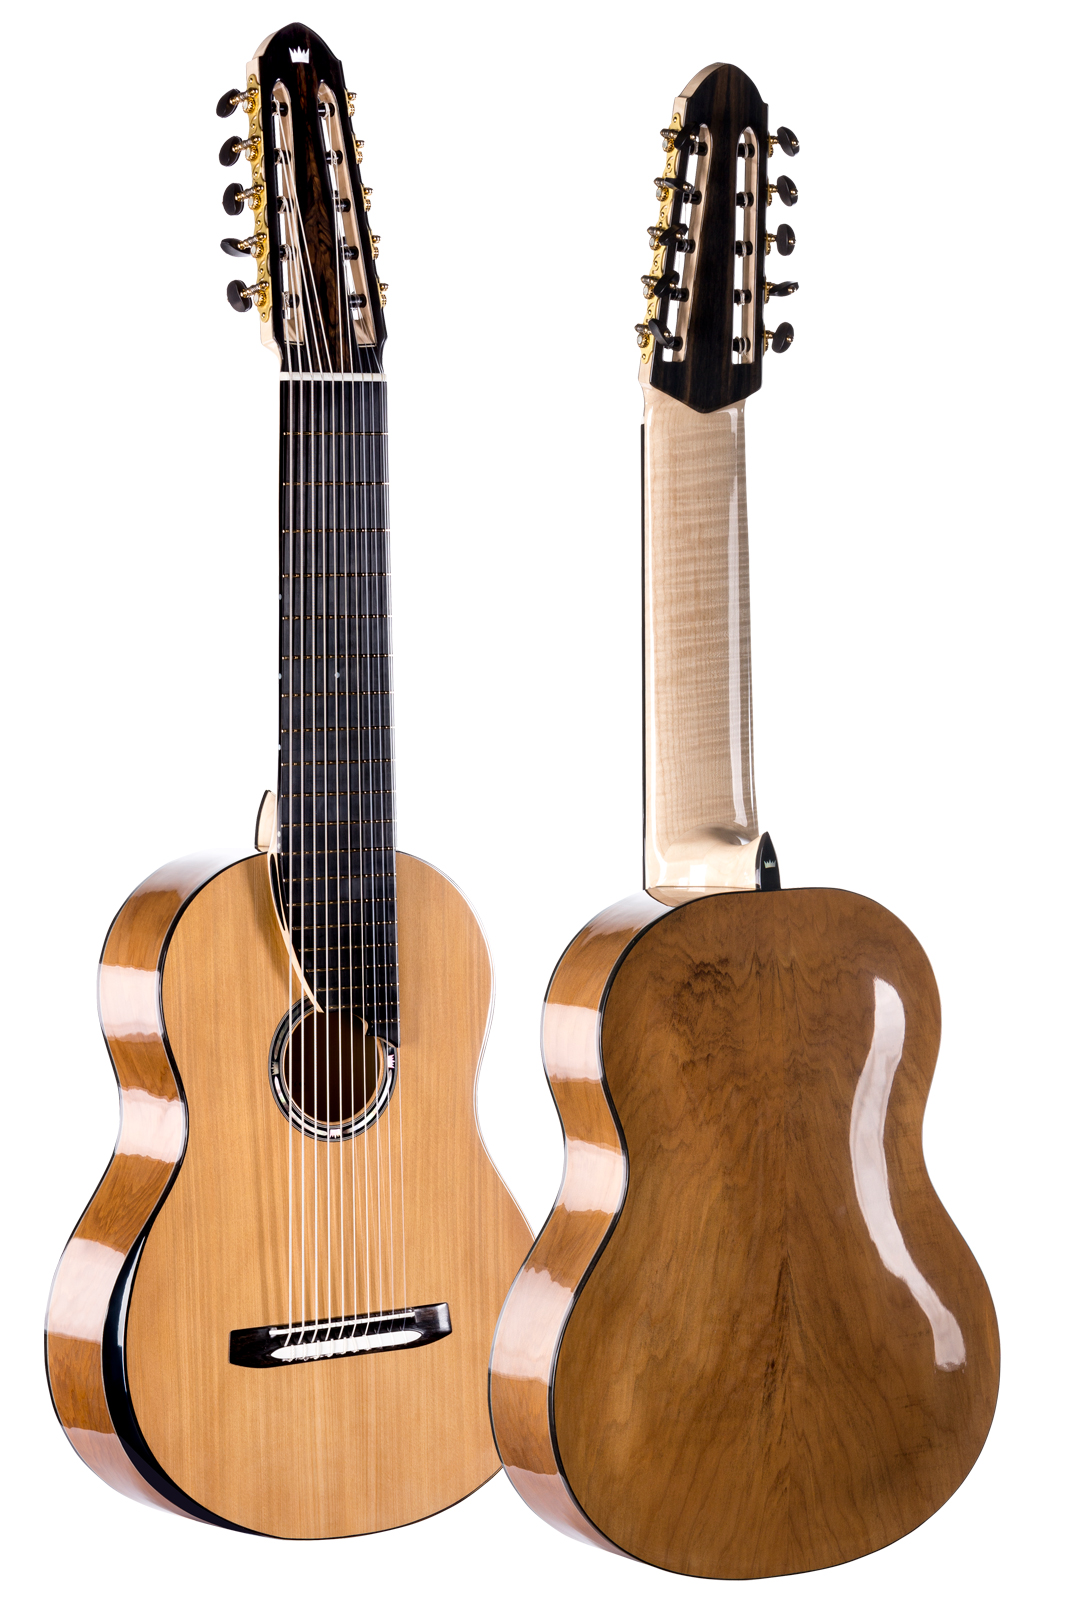 10-string classical guitar